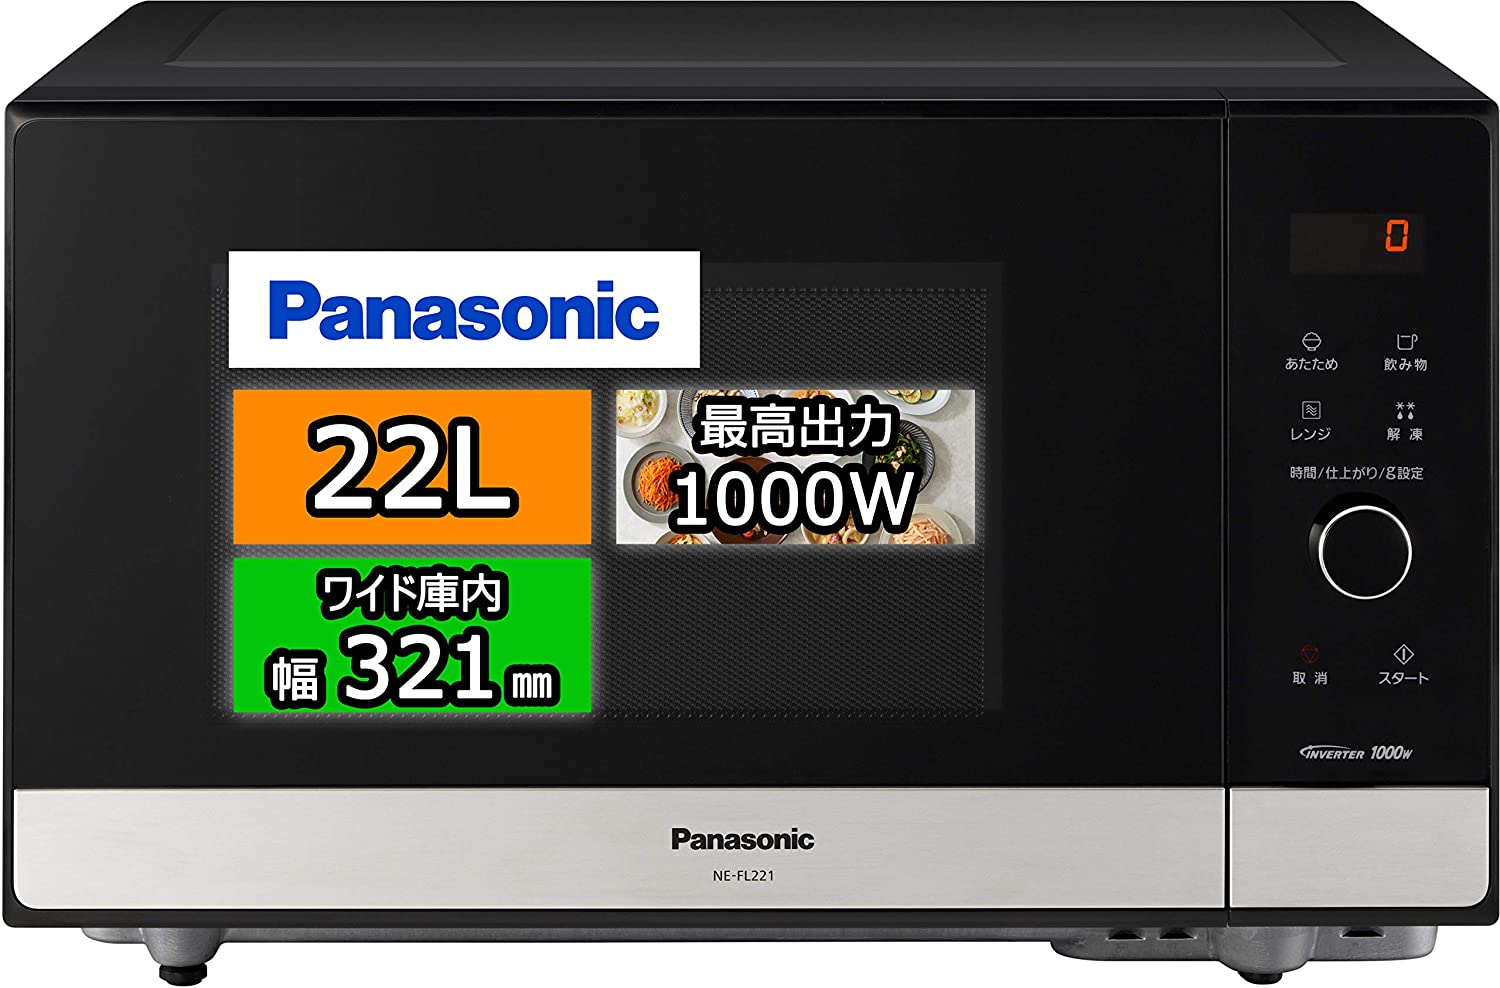 Panasonic(パナソニック) 電子レンジ NE-FL221の商品画像サムネ1 